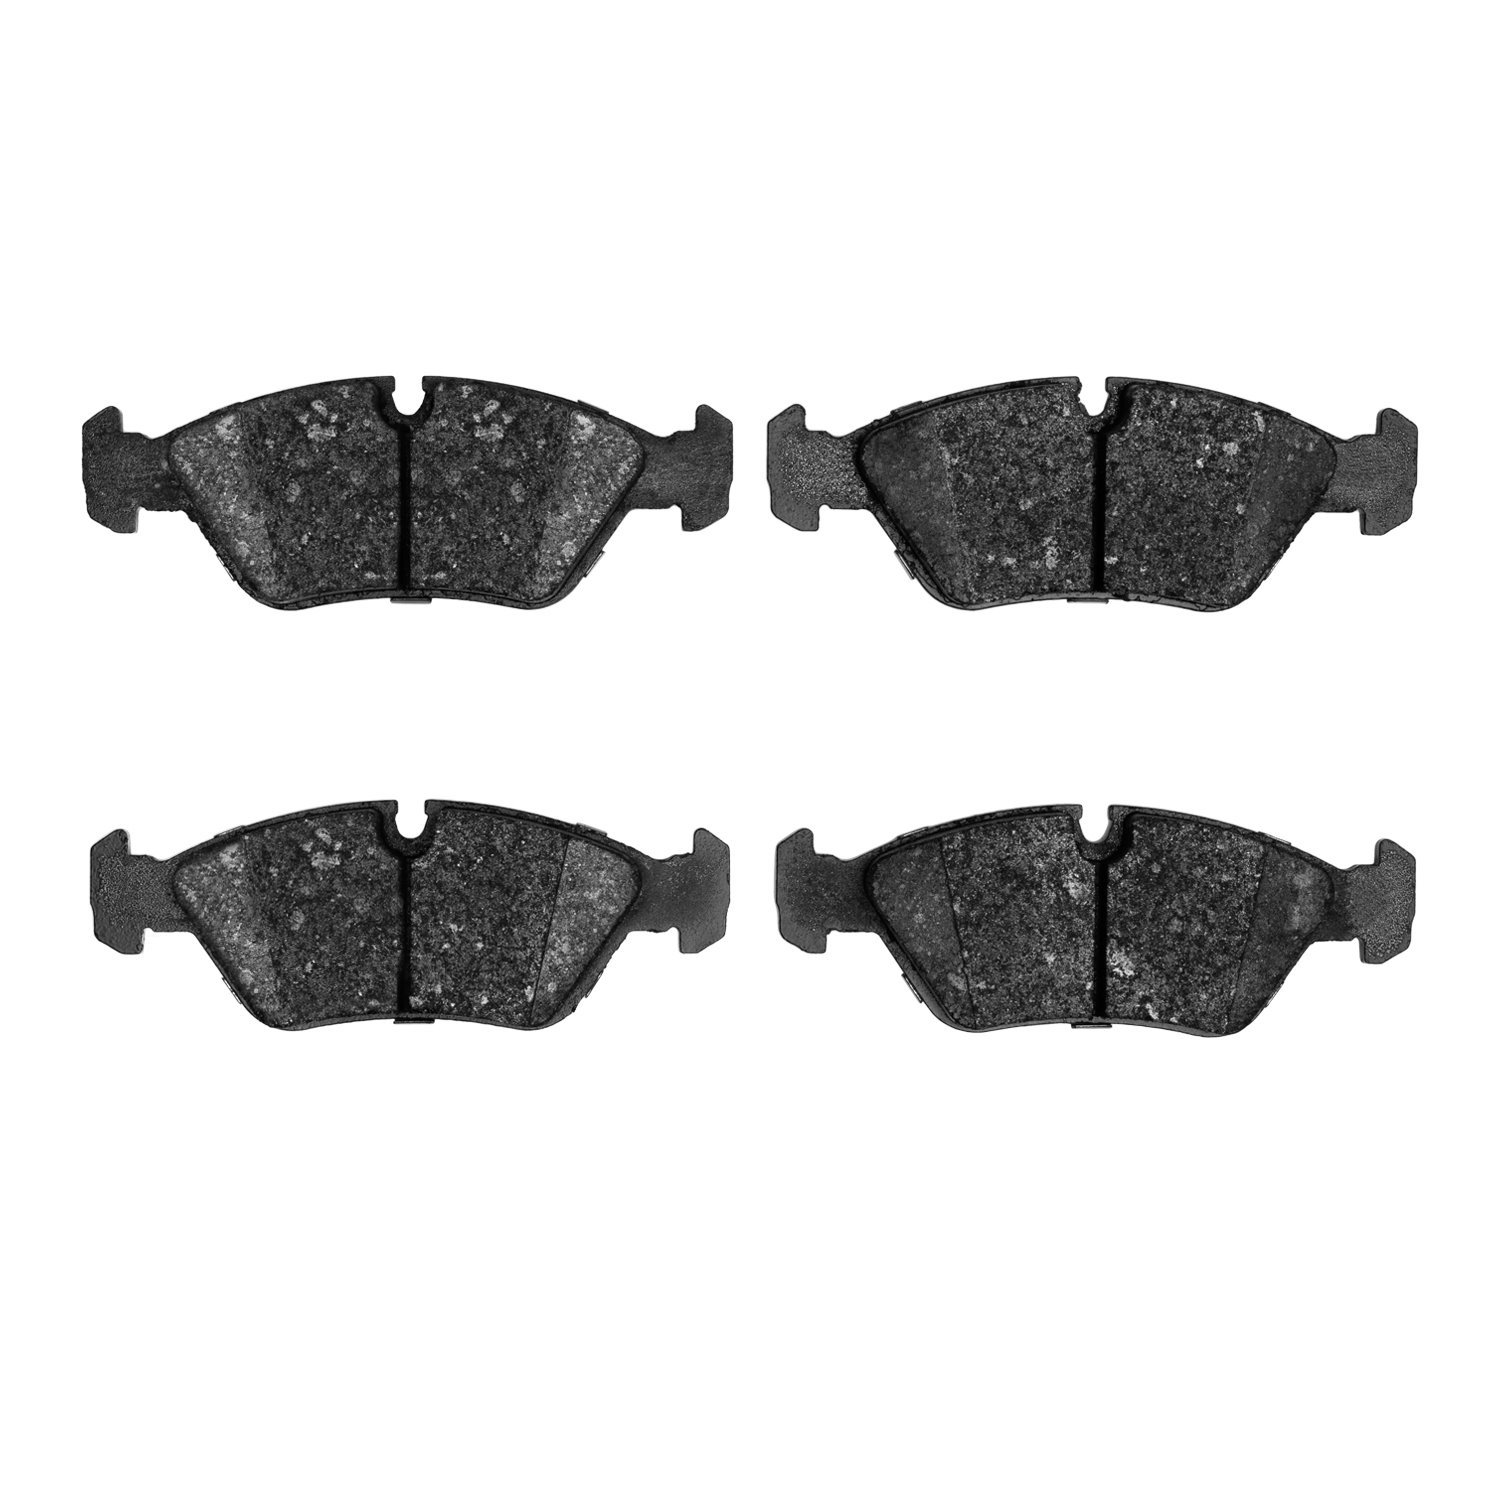 1310-0253-00 3000-Series Ceramic Brake Pads, 1982-1993 Multiple Makes/Models, Position: Front